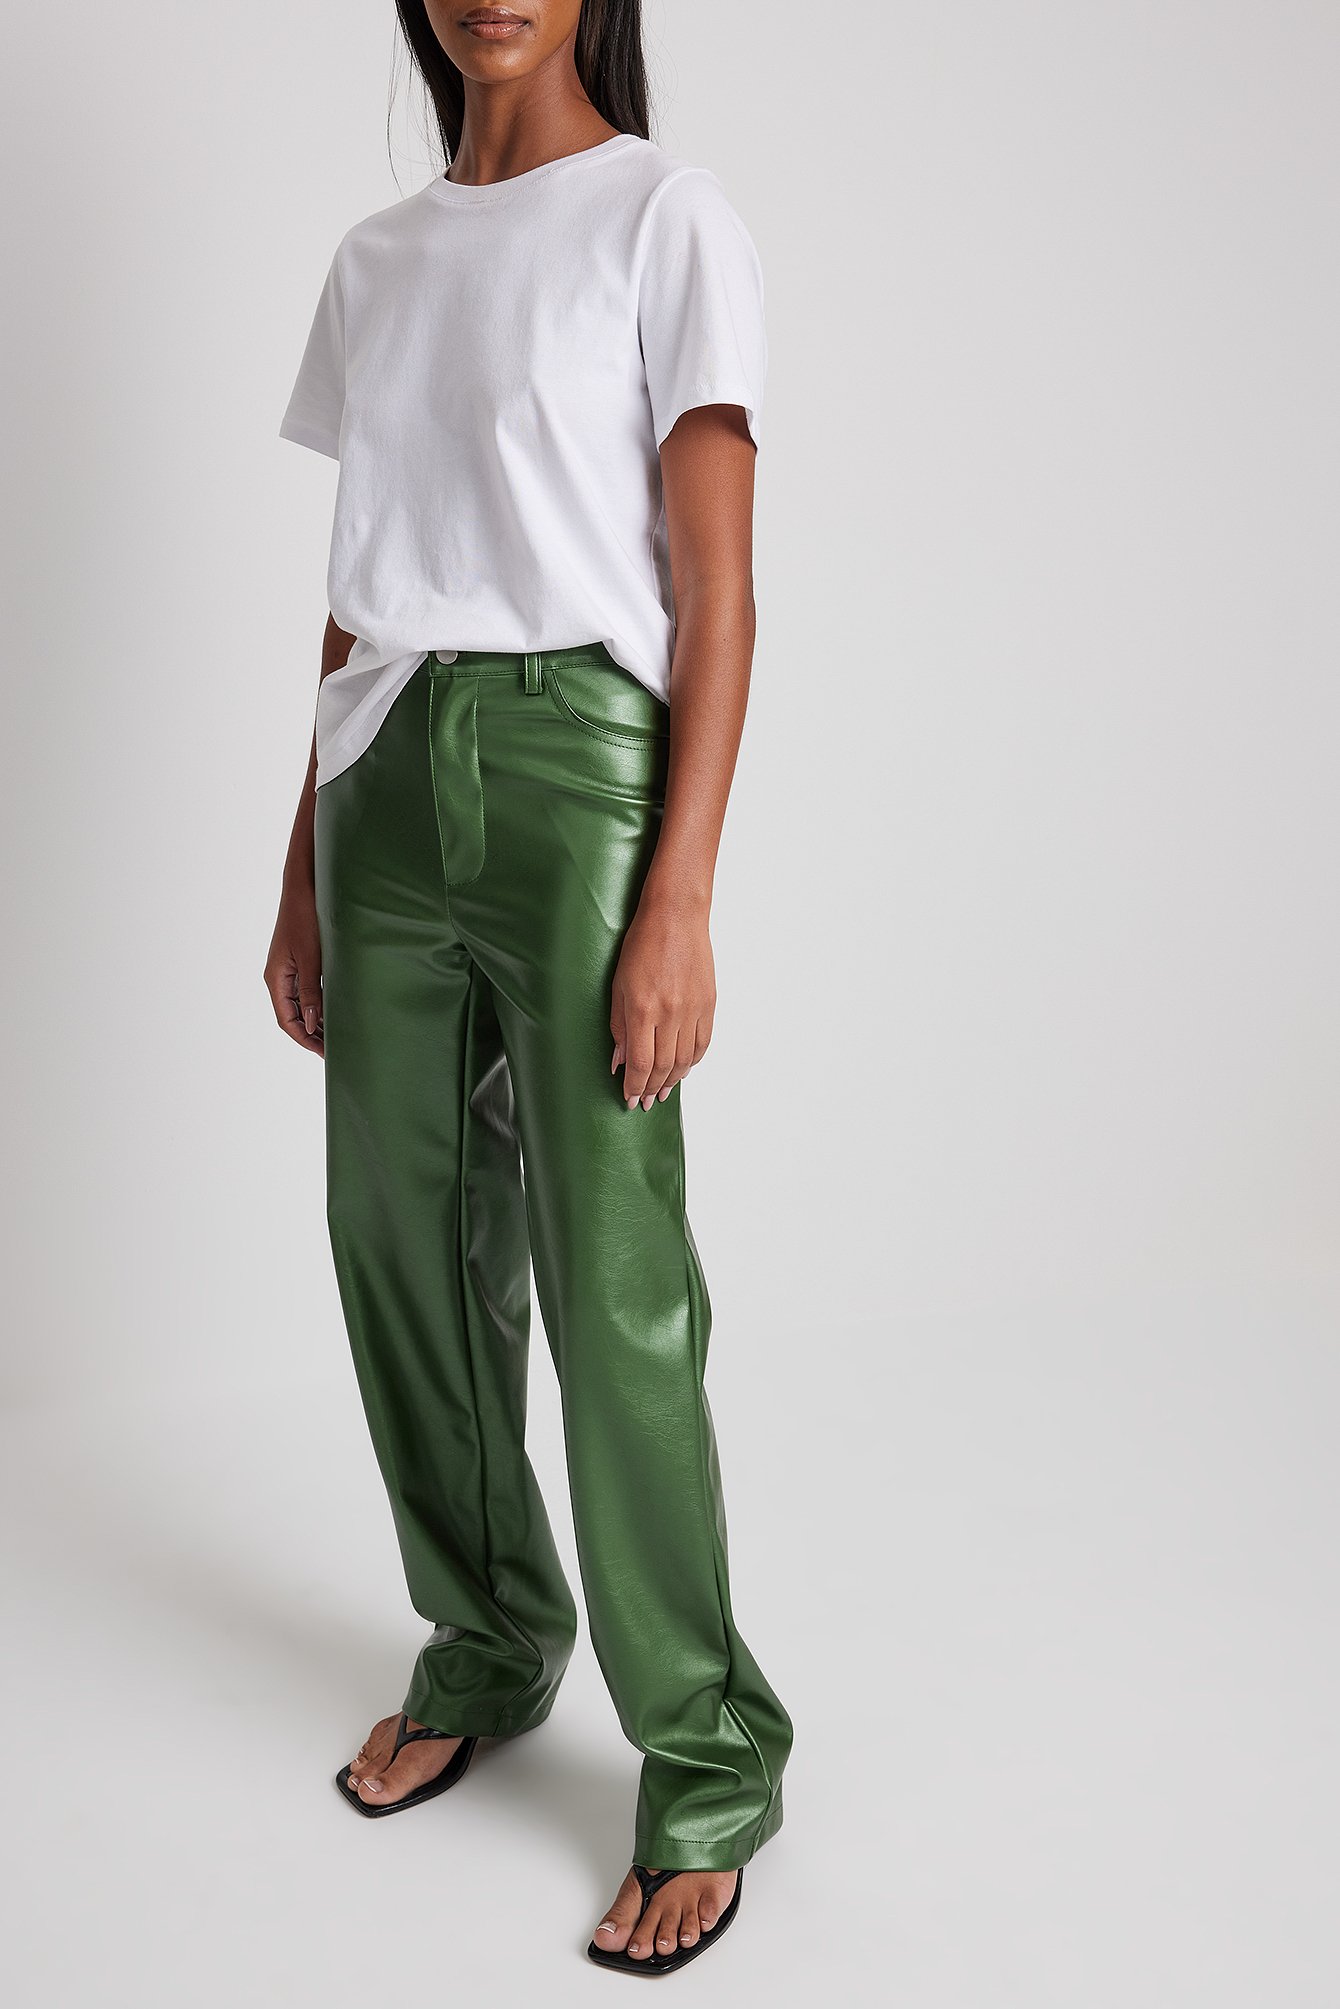 Forest Green Metallic PU Trousers